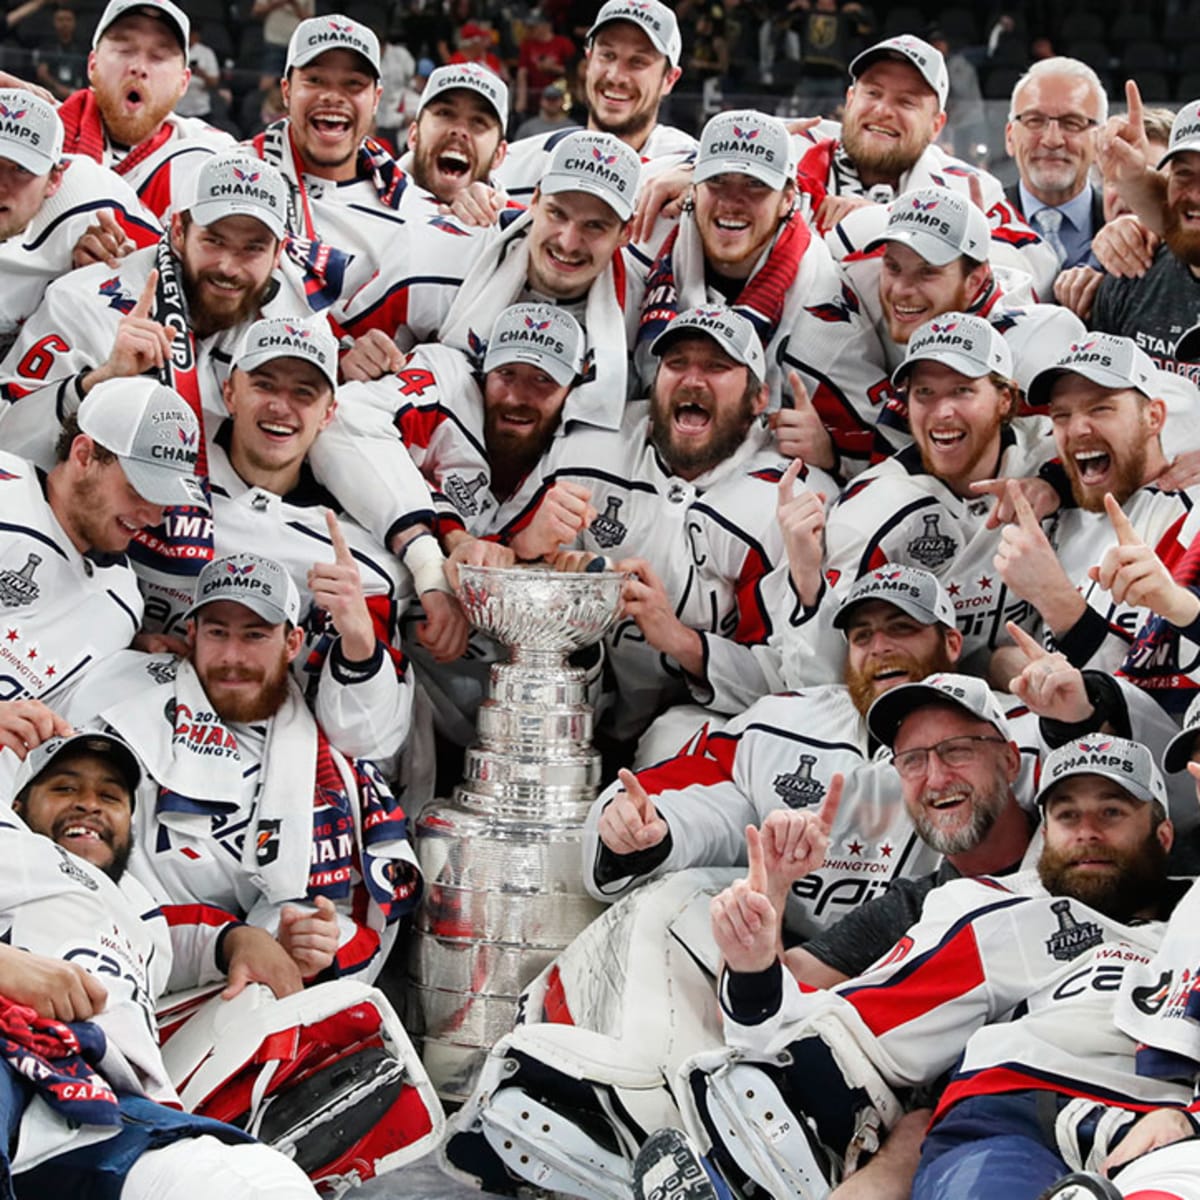 Caps fans across DMV celebrate historic Stanley Cup win